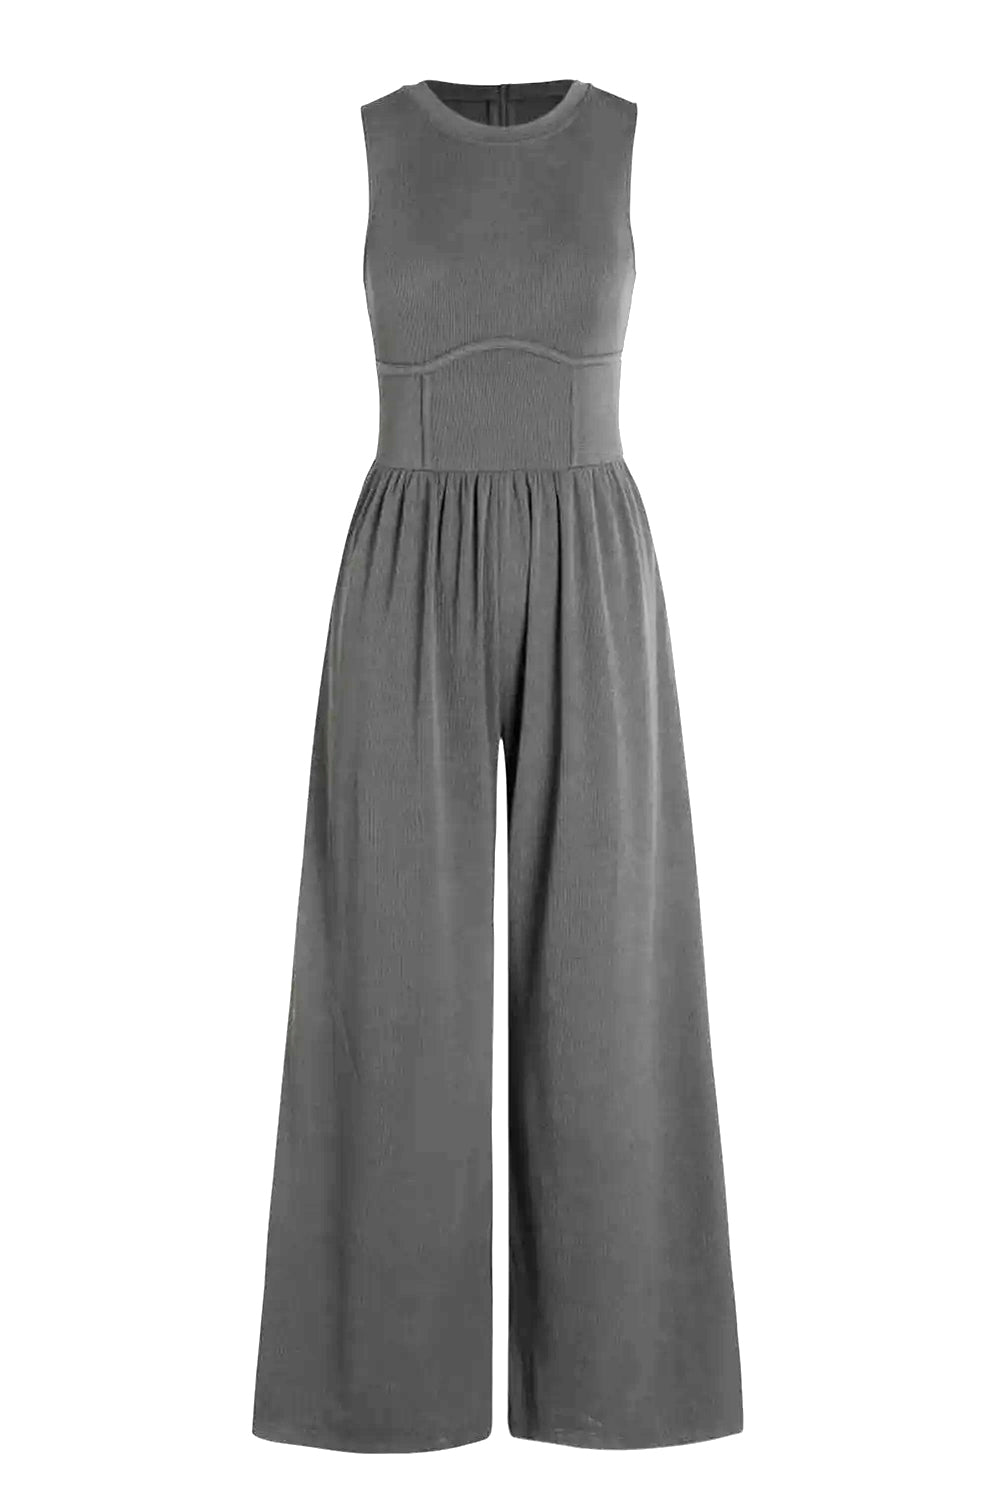 Round Neck Sleeveless Jumpsuit with Pockets - TiffanyzKlozet